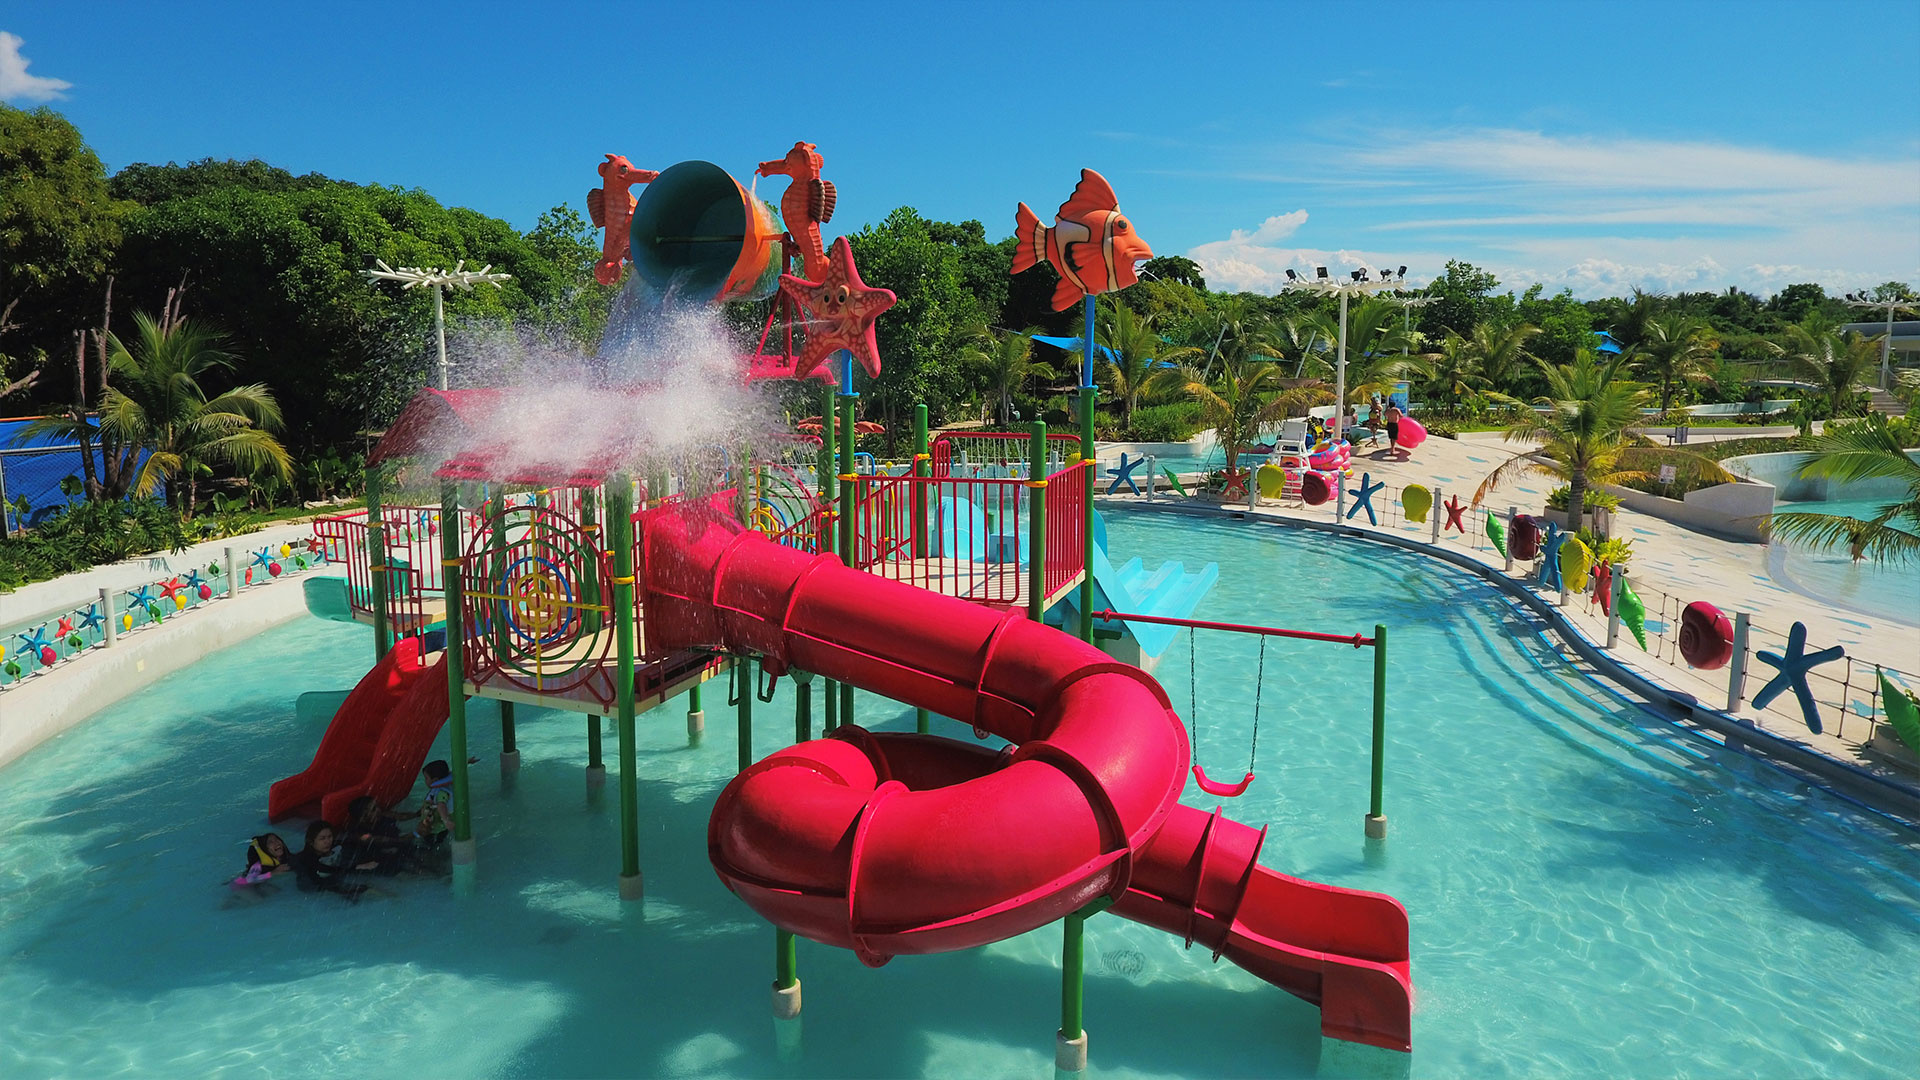 Waterpark: Astoria Palawan, Wave pools, Flowriders, Spiral slides. 1920x1080 Full HD Background.